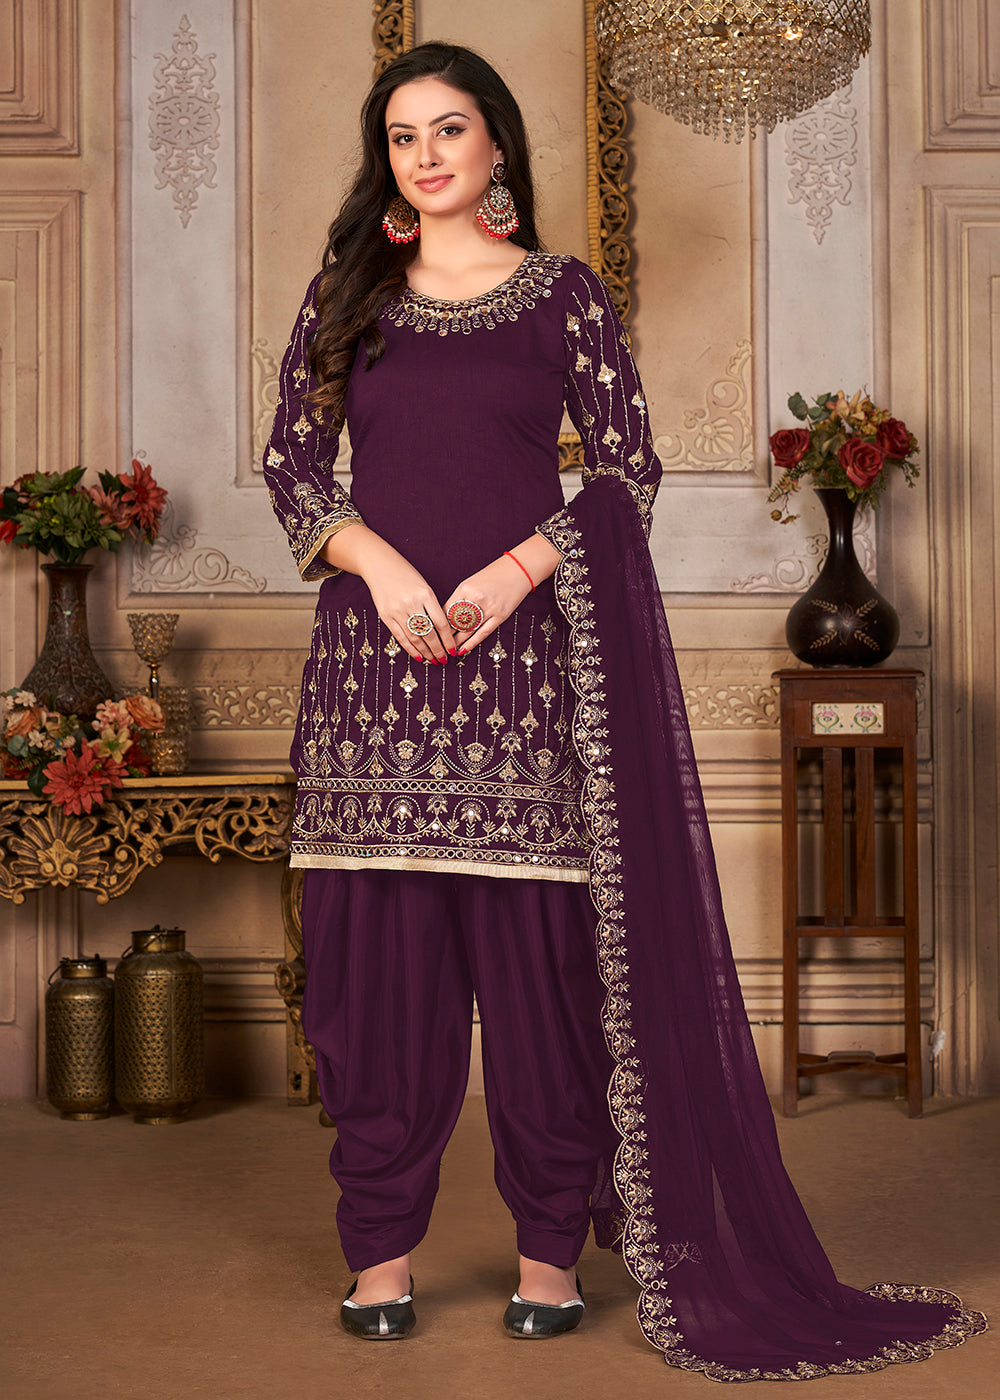 Women Pakistani Salwar Kameez Indian Bollywood Party Wedding Salwar Suit  new eid | eBay